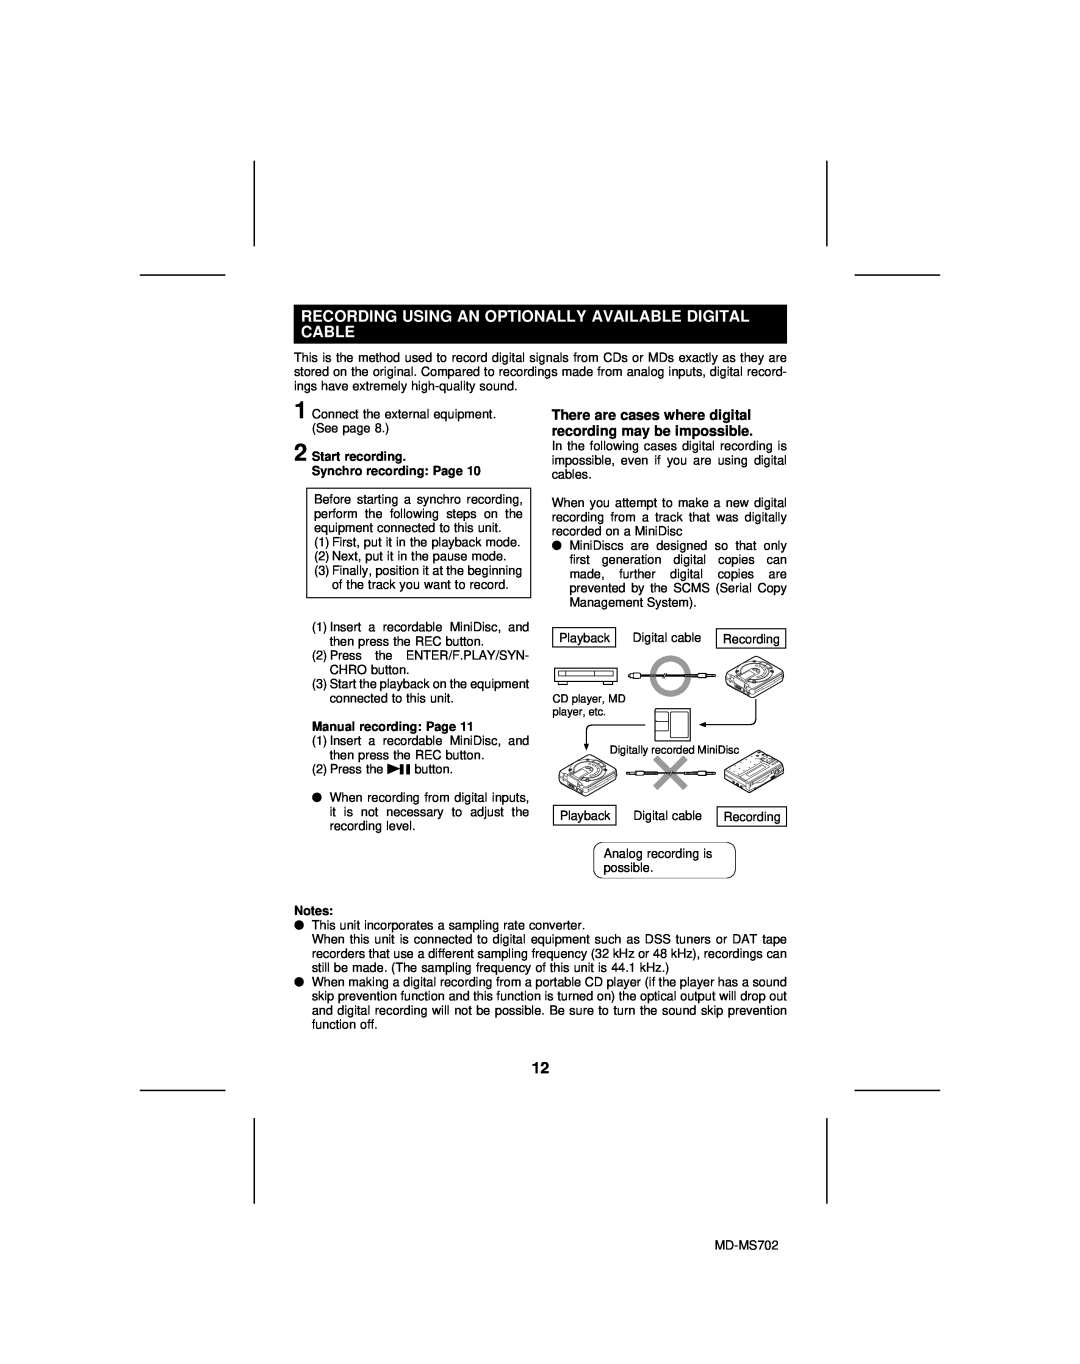 Sharp MD-MS702, MD-R2 operation manual Start recording Synchro recording Page, Manual recording Page 